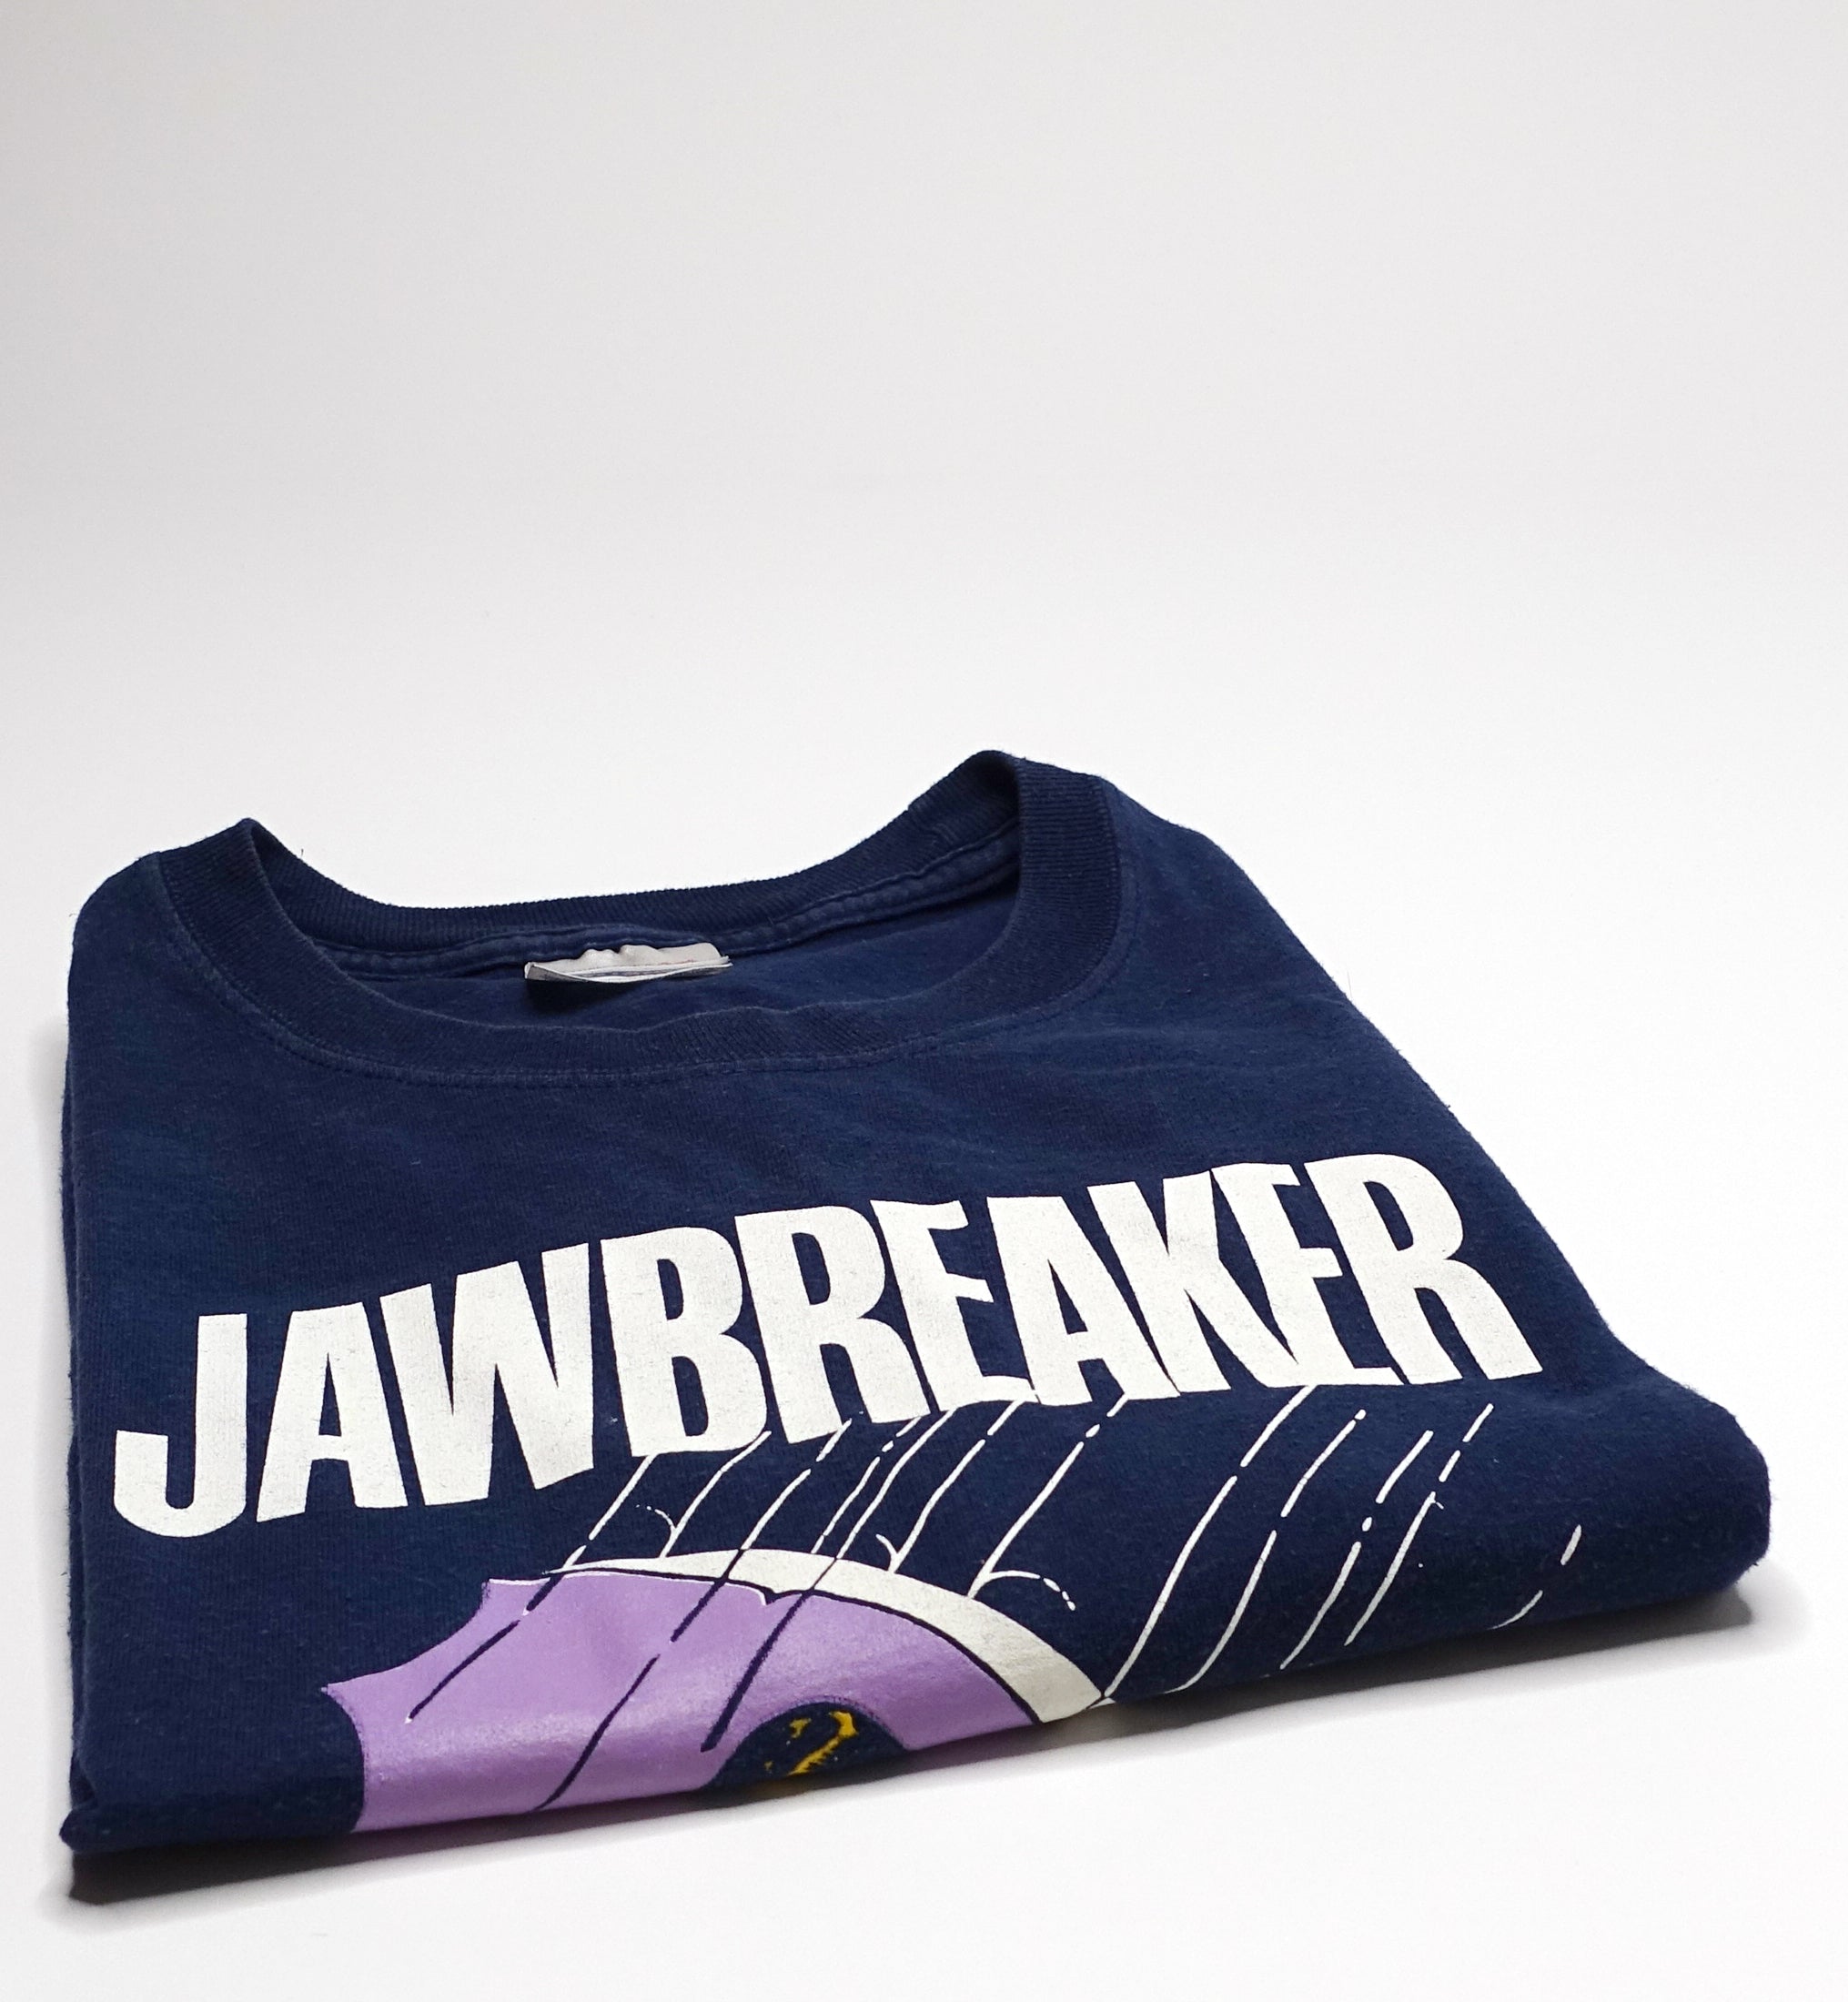 Jawbreaker - When It Pains Its Roars 90's/00's Shirt (Hanes) Size Large